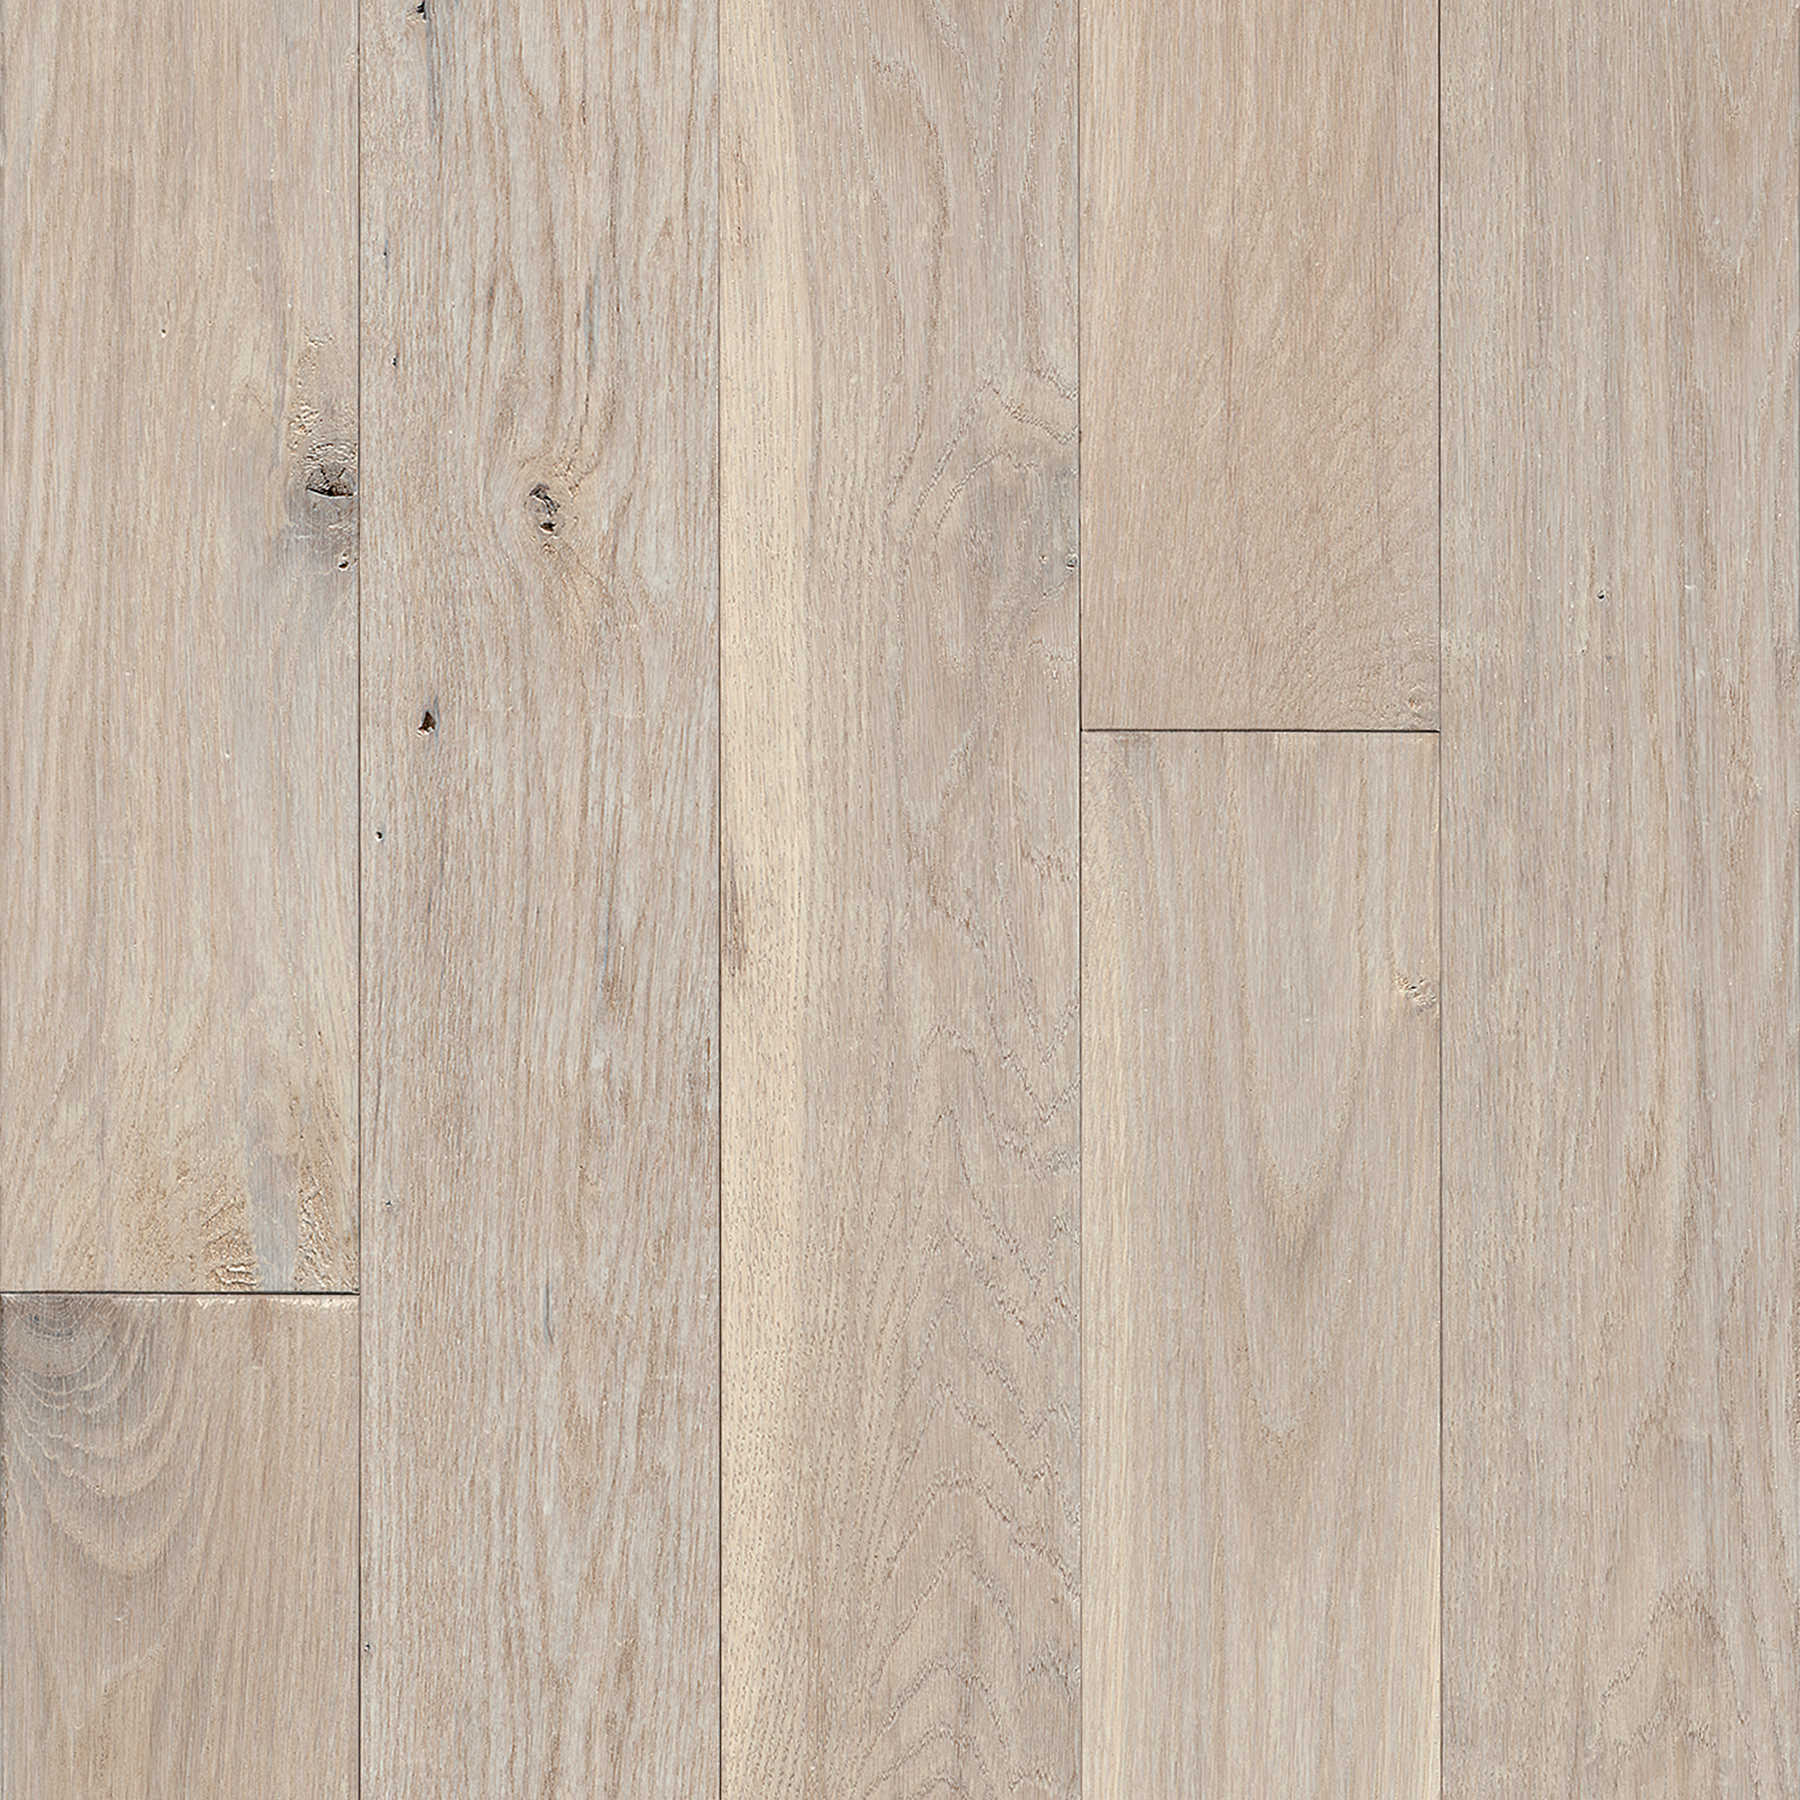 Oak Solid Hardwood Sbkss59l401h, Muskoka Prefinished Hardwood Flooring